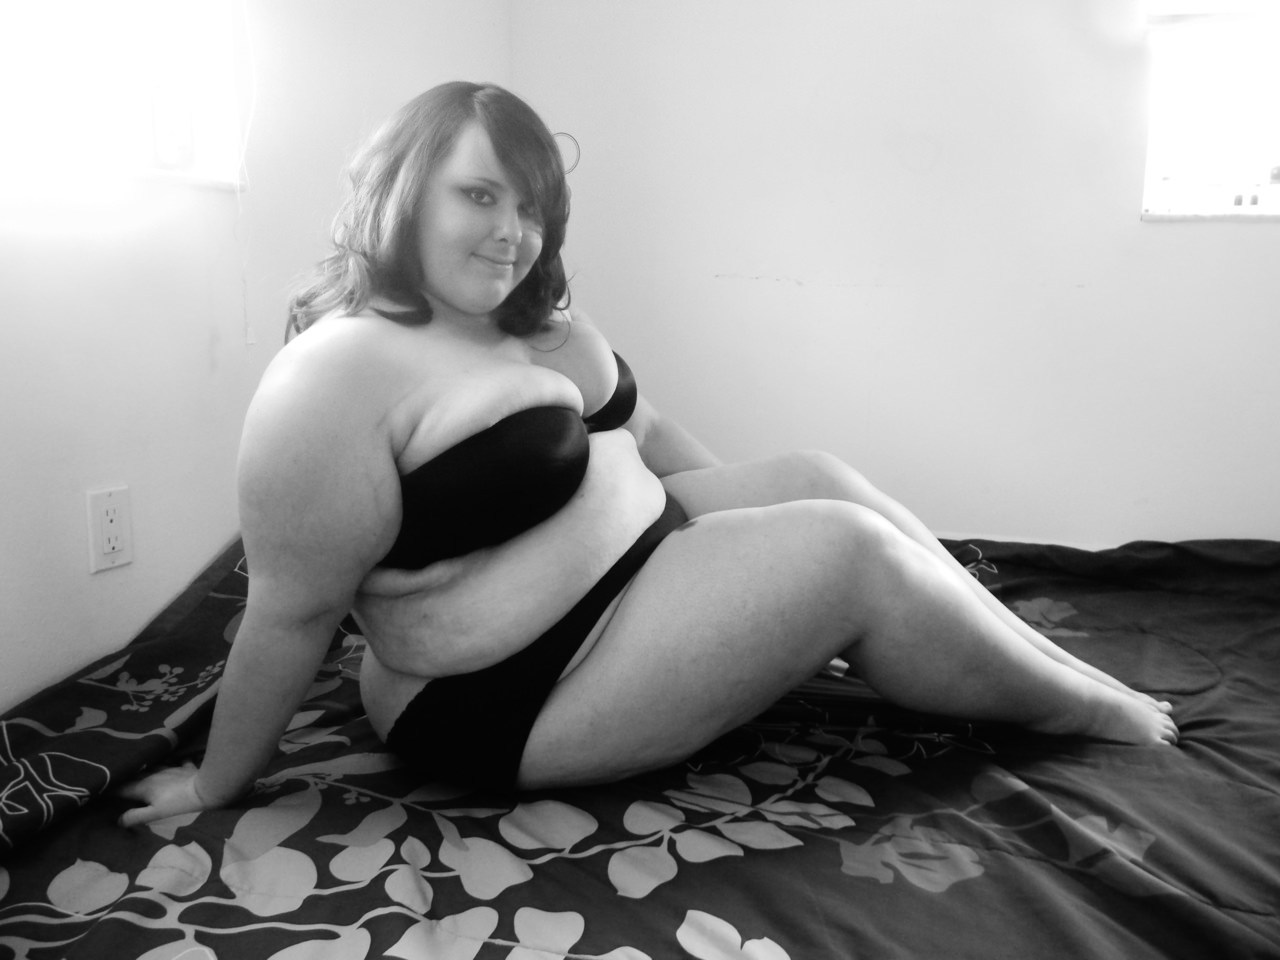 https://motherlesspics.com/uploads/posts/2023-03/1679229639_motherlesspics-com-p-porn-fat-woman-dancing-and-undressing-in-t-30.jpg